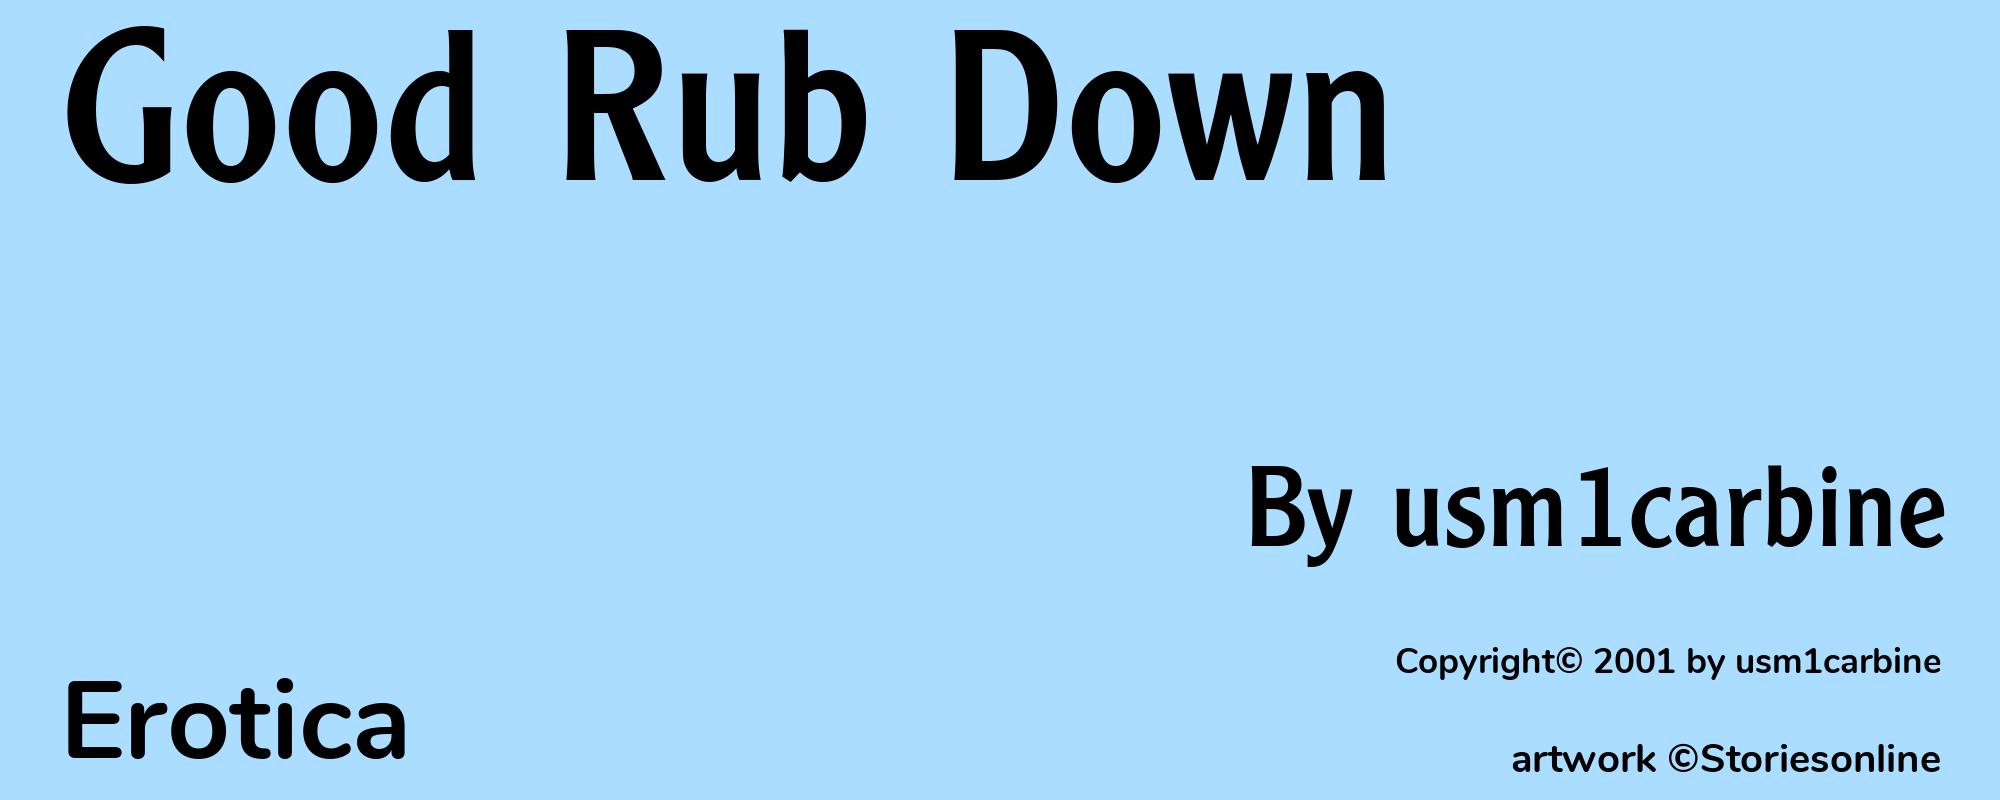 Good Rub Down - Cover